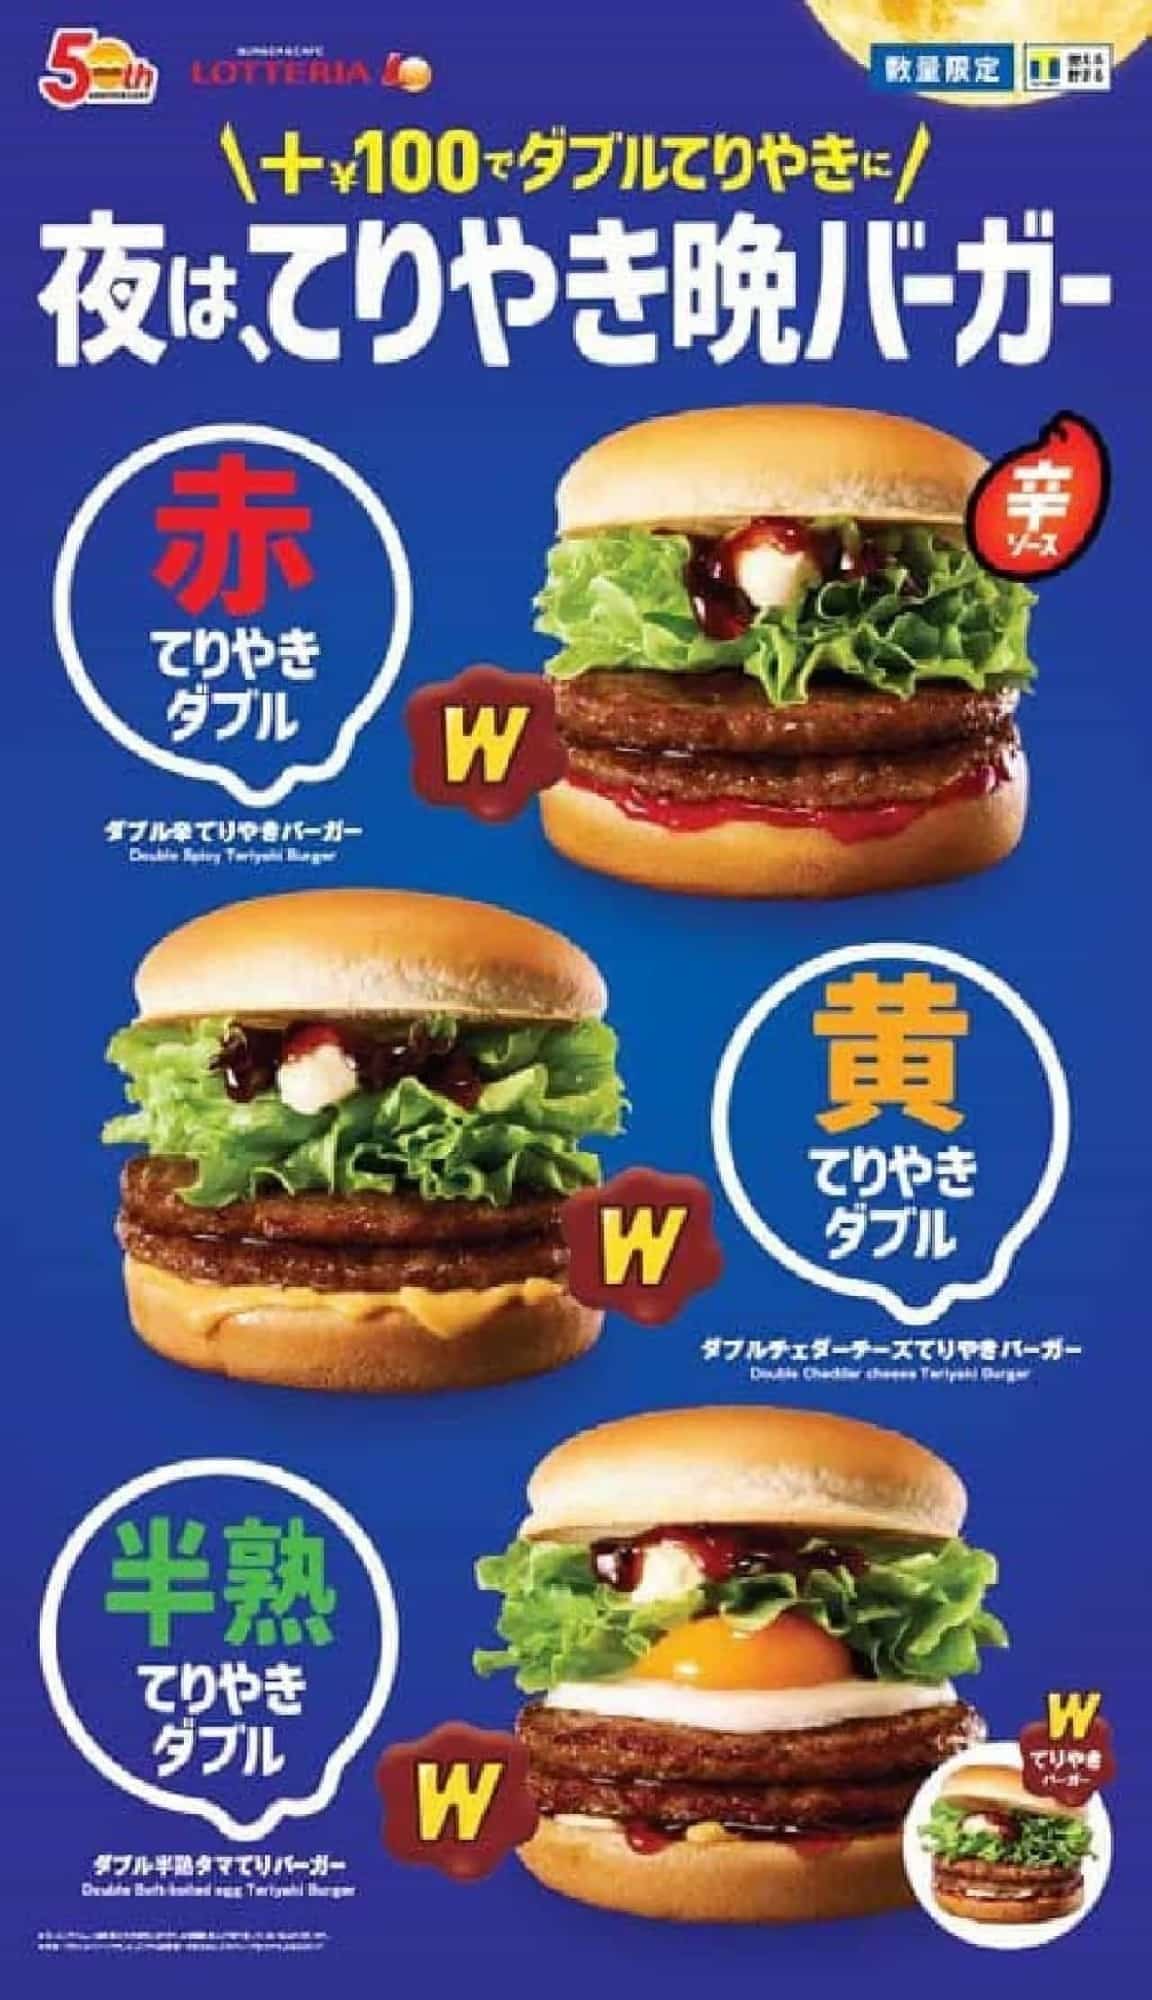 Lotteria "Spicy Toriyaki Burger" and "Cheddar Cheese Toriyaki Burger" Double